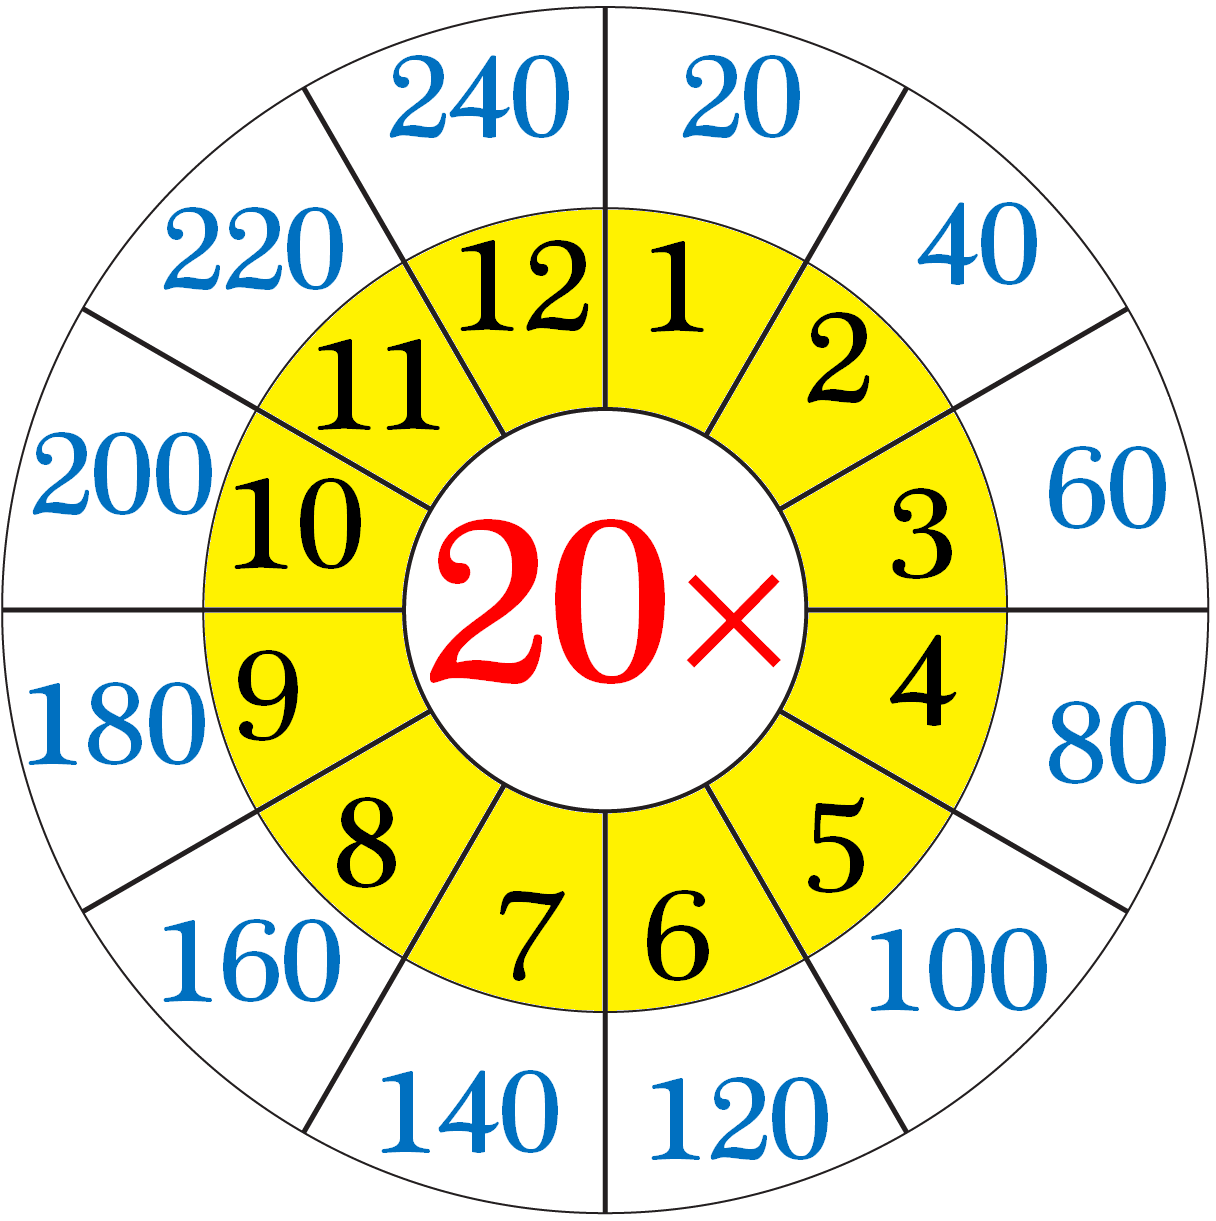 Multiplication Table of Twenty